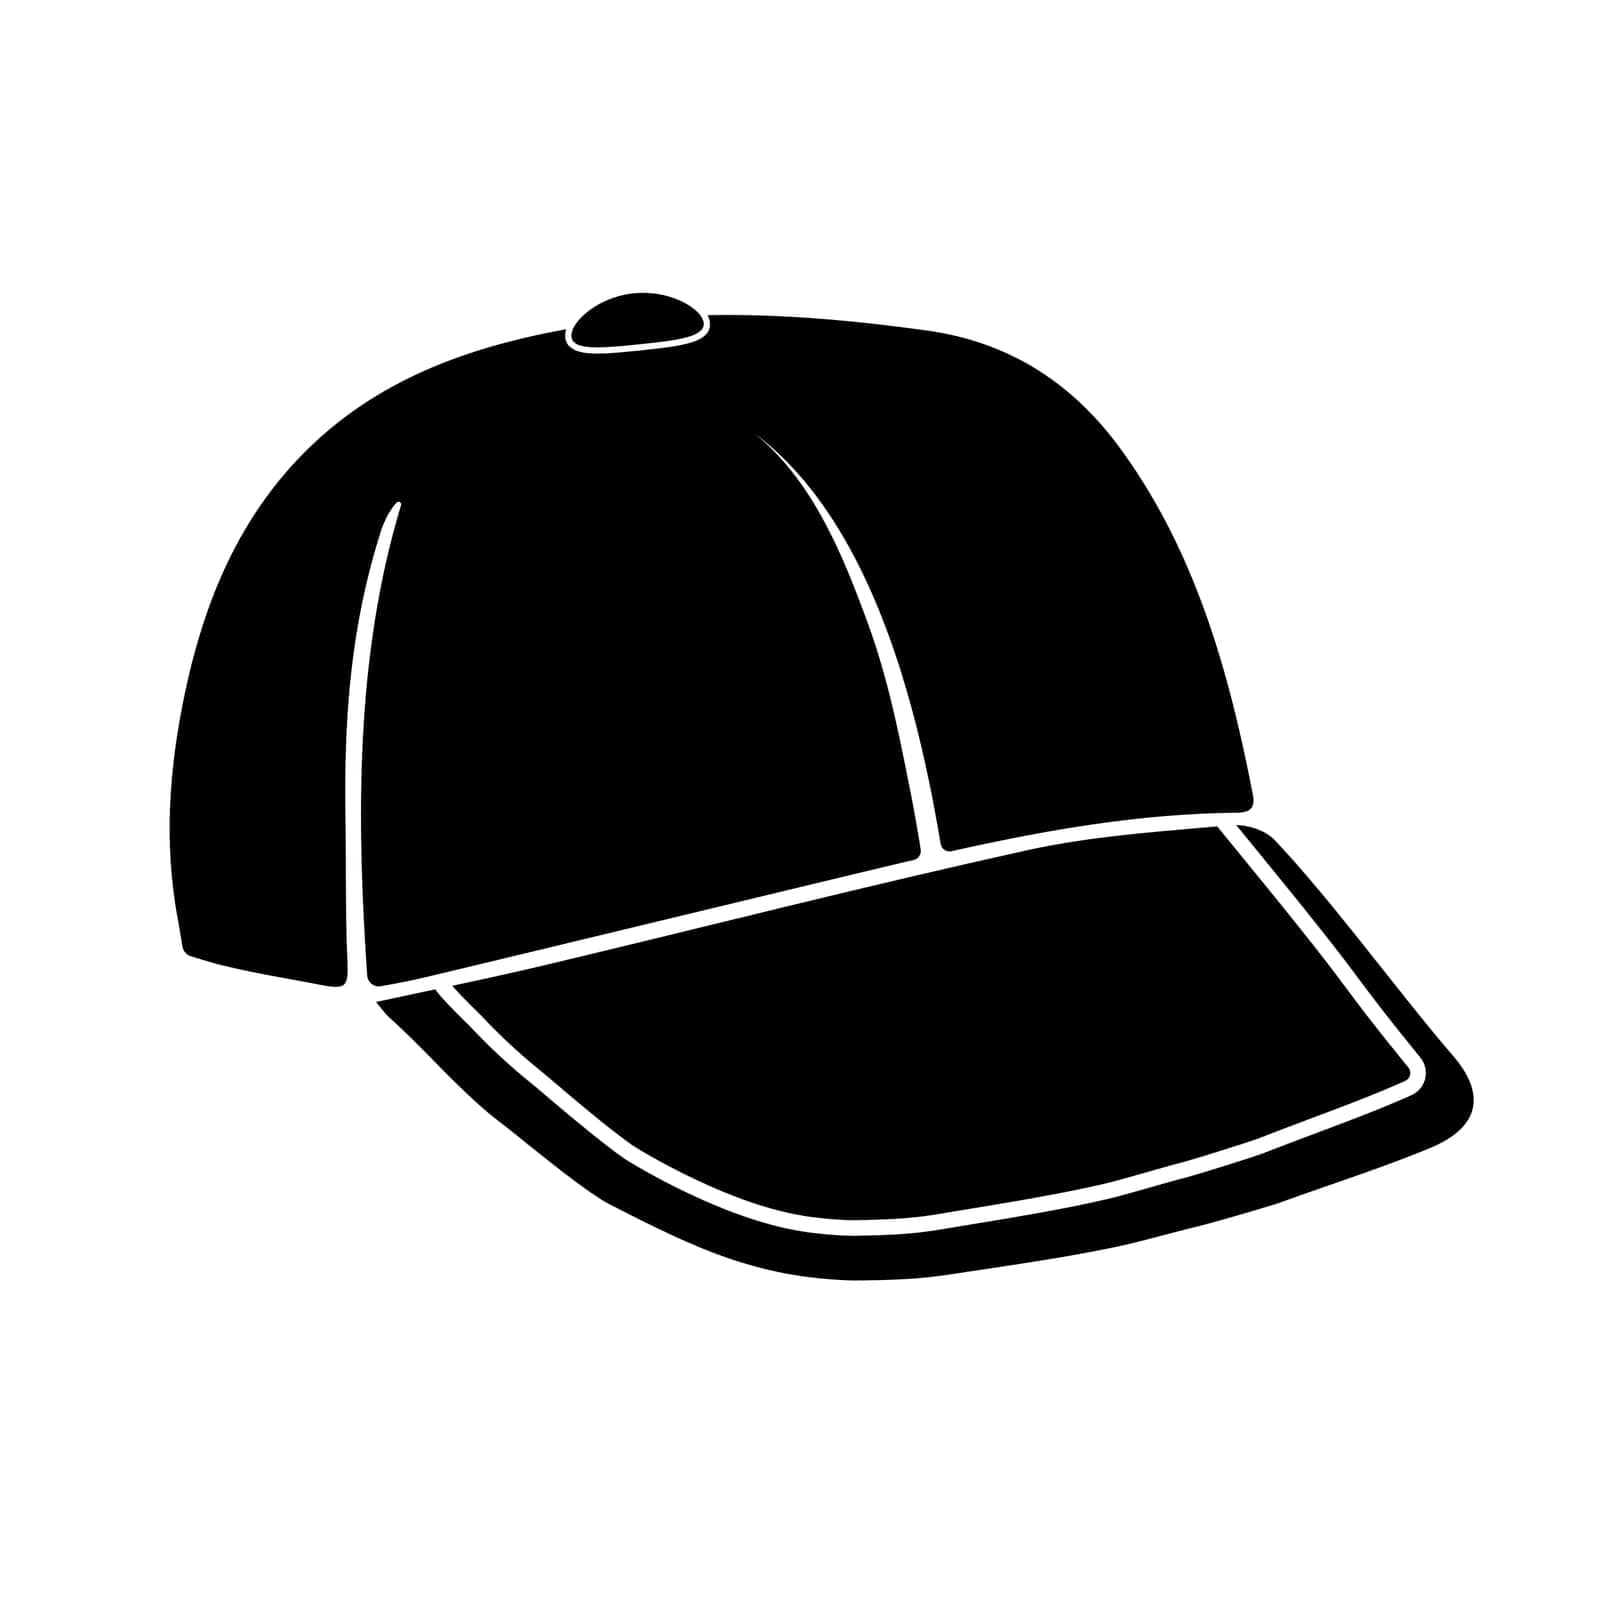 Baseball cap icon. Black baseball cap icon on white background. Vector illustration